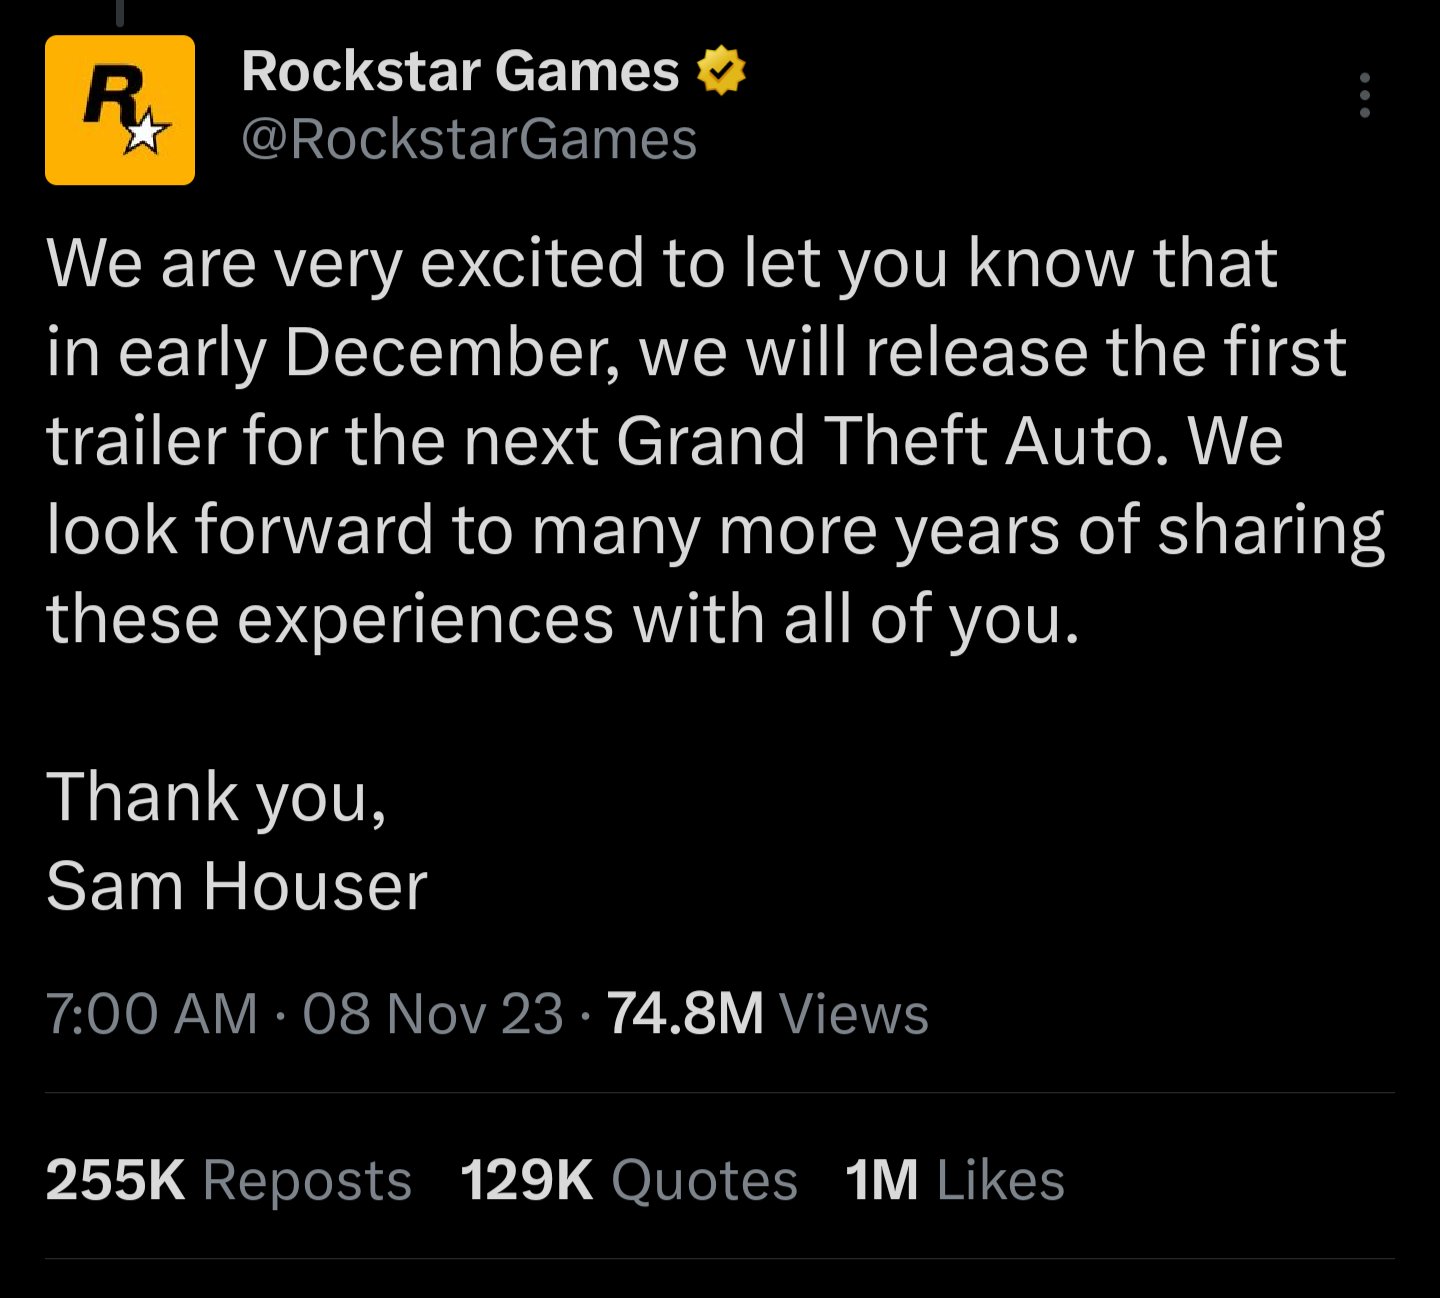 Rockstar Games GTA 6 Trailer announcement passes 1 Million likes, becomes  most liked gaming tweet - RockstarINTEL